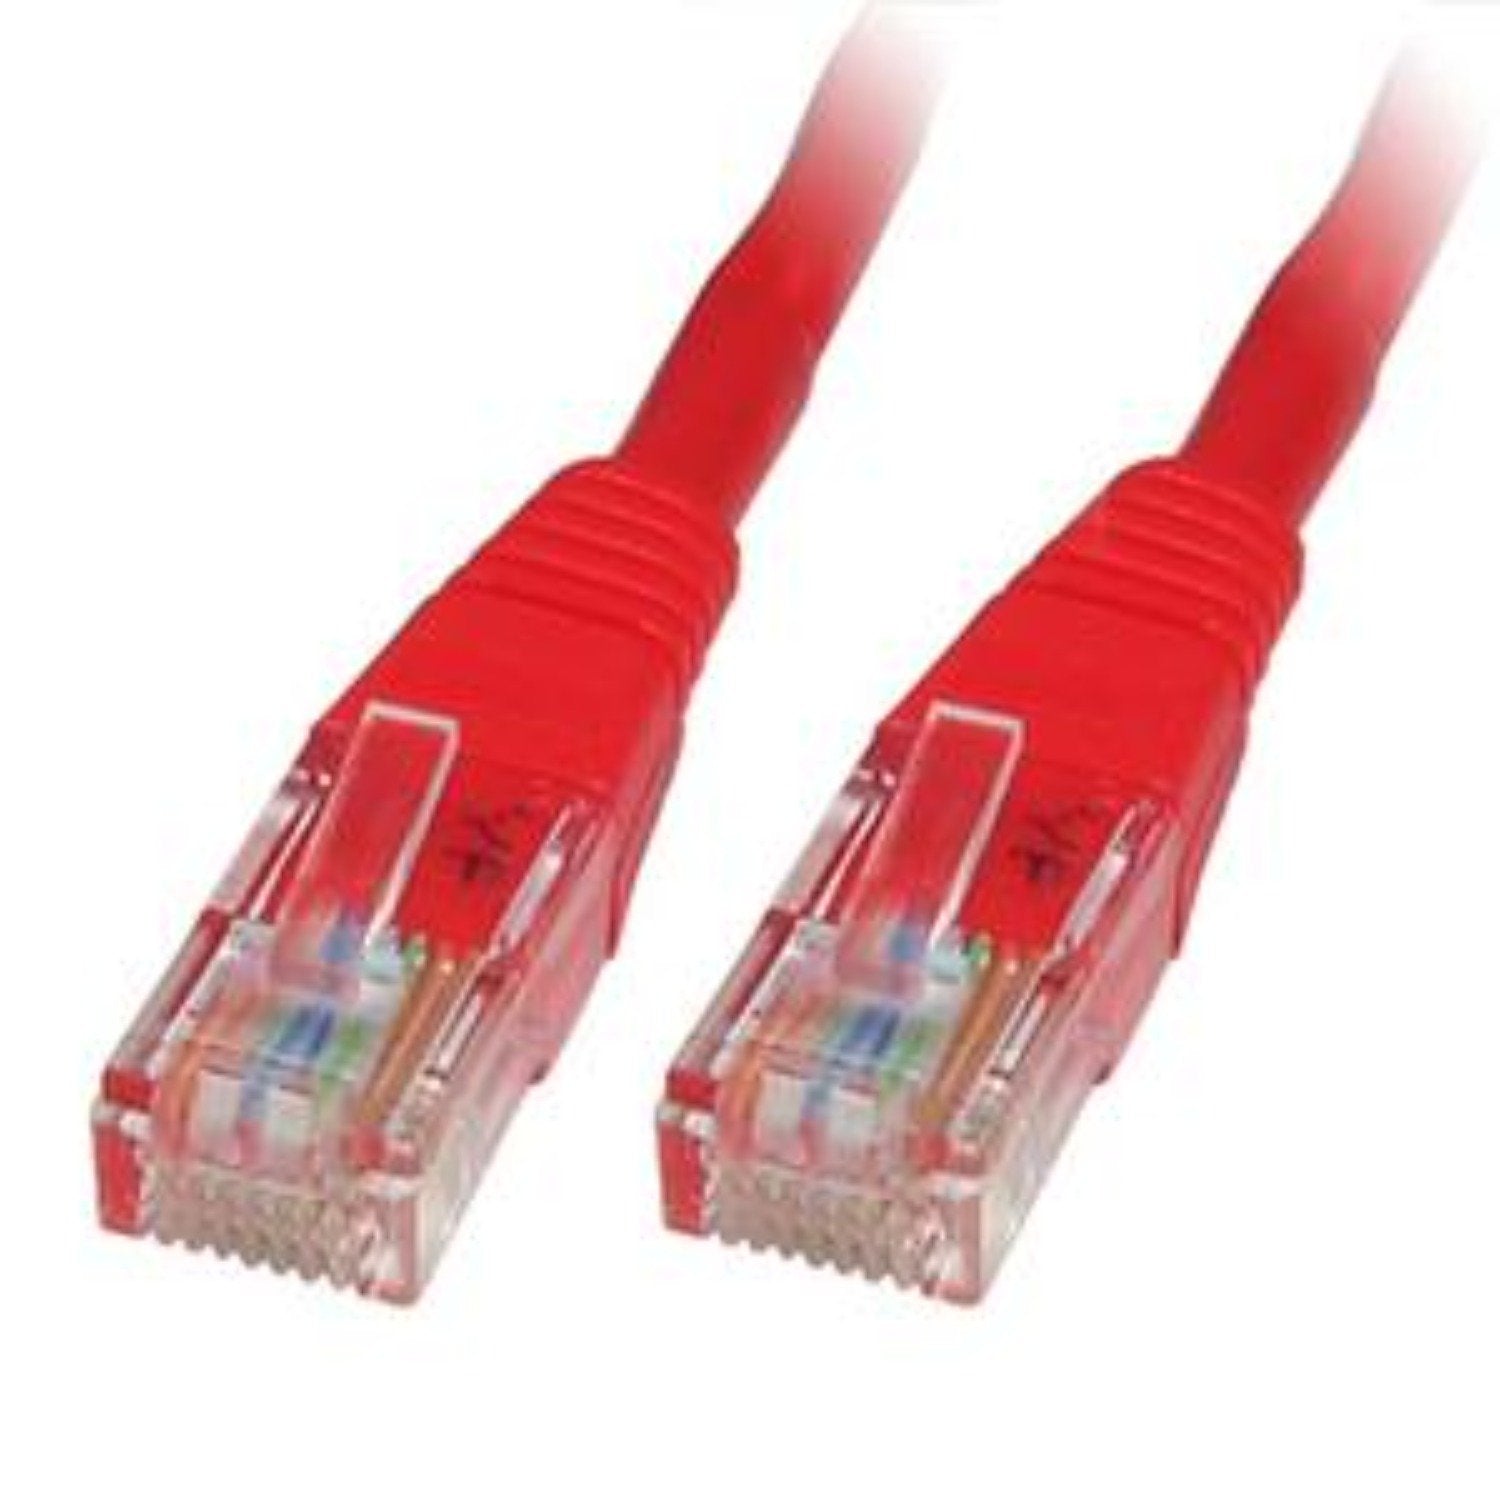 cable rj45 cat 5e 20m red colour